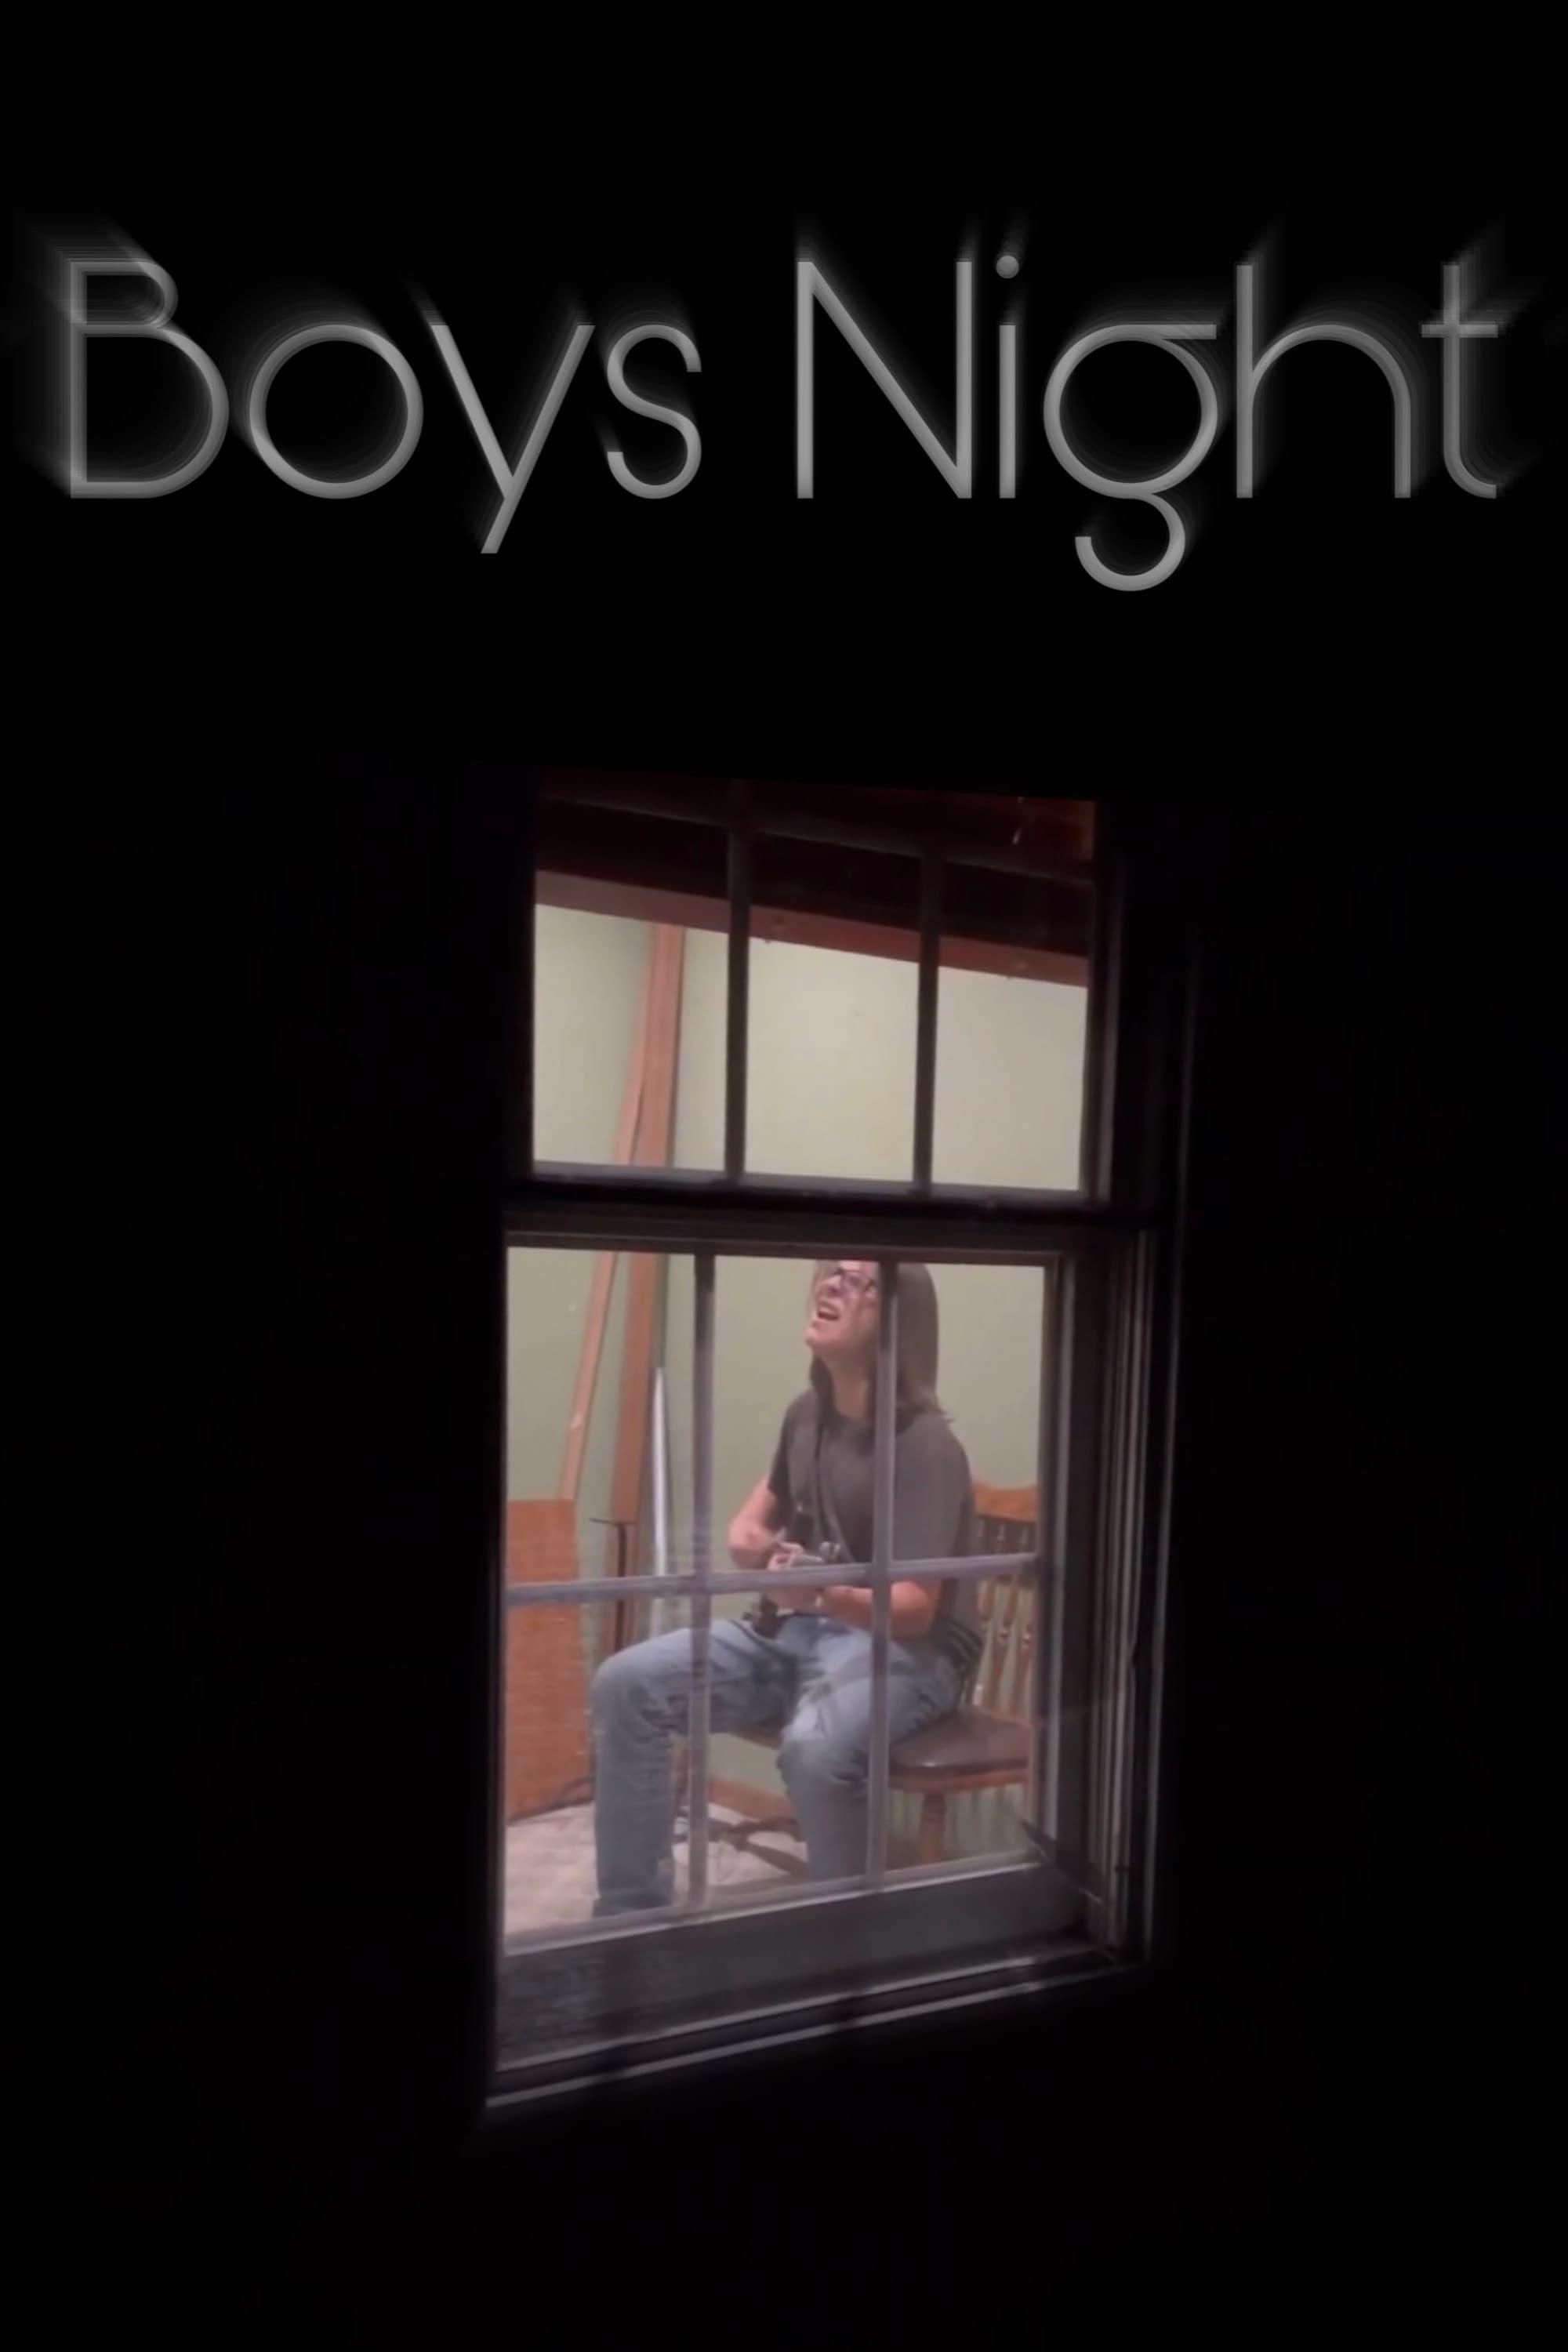 Boys Night poster